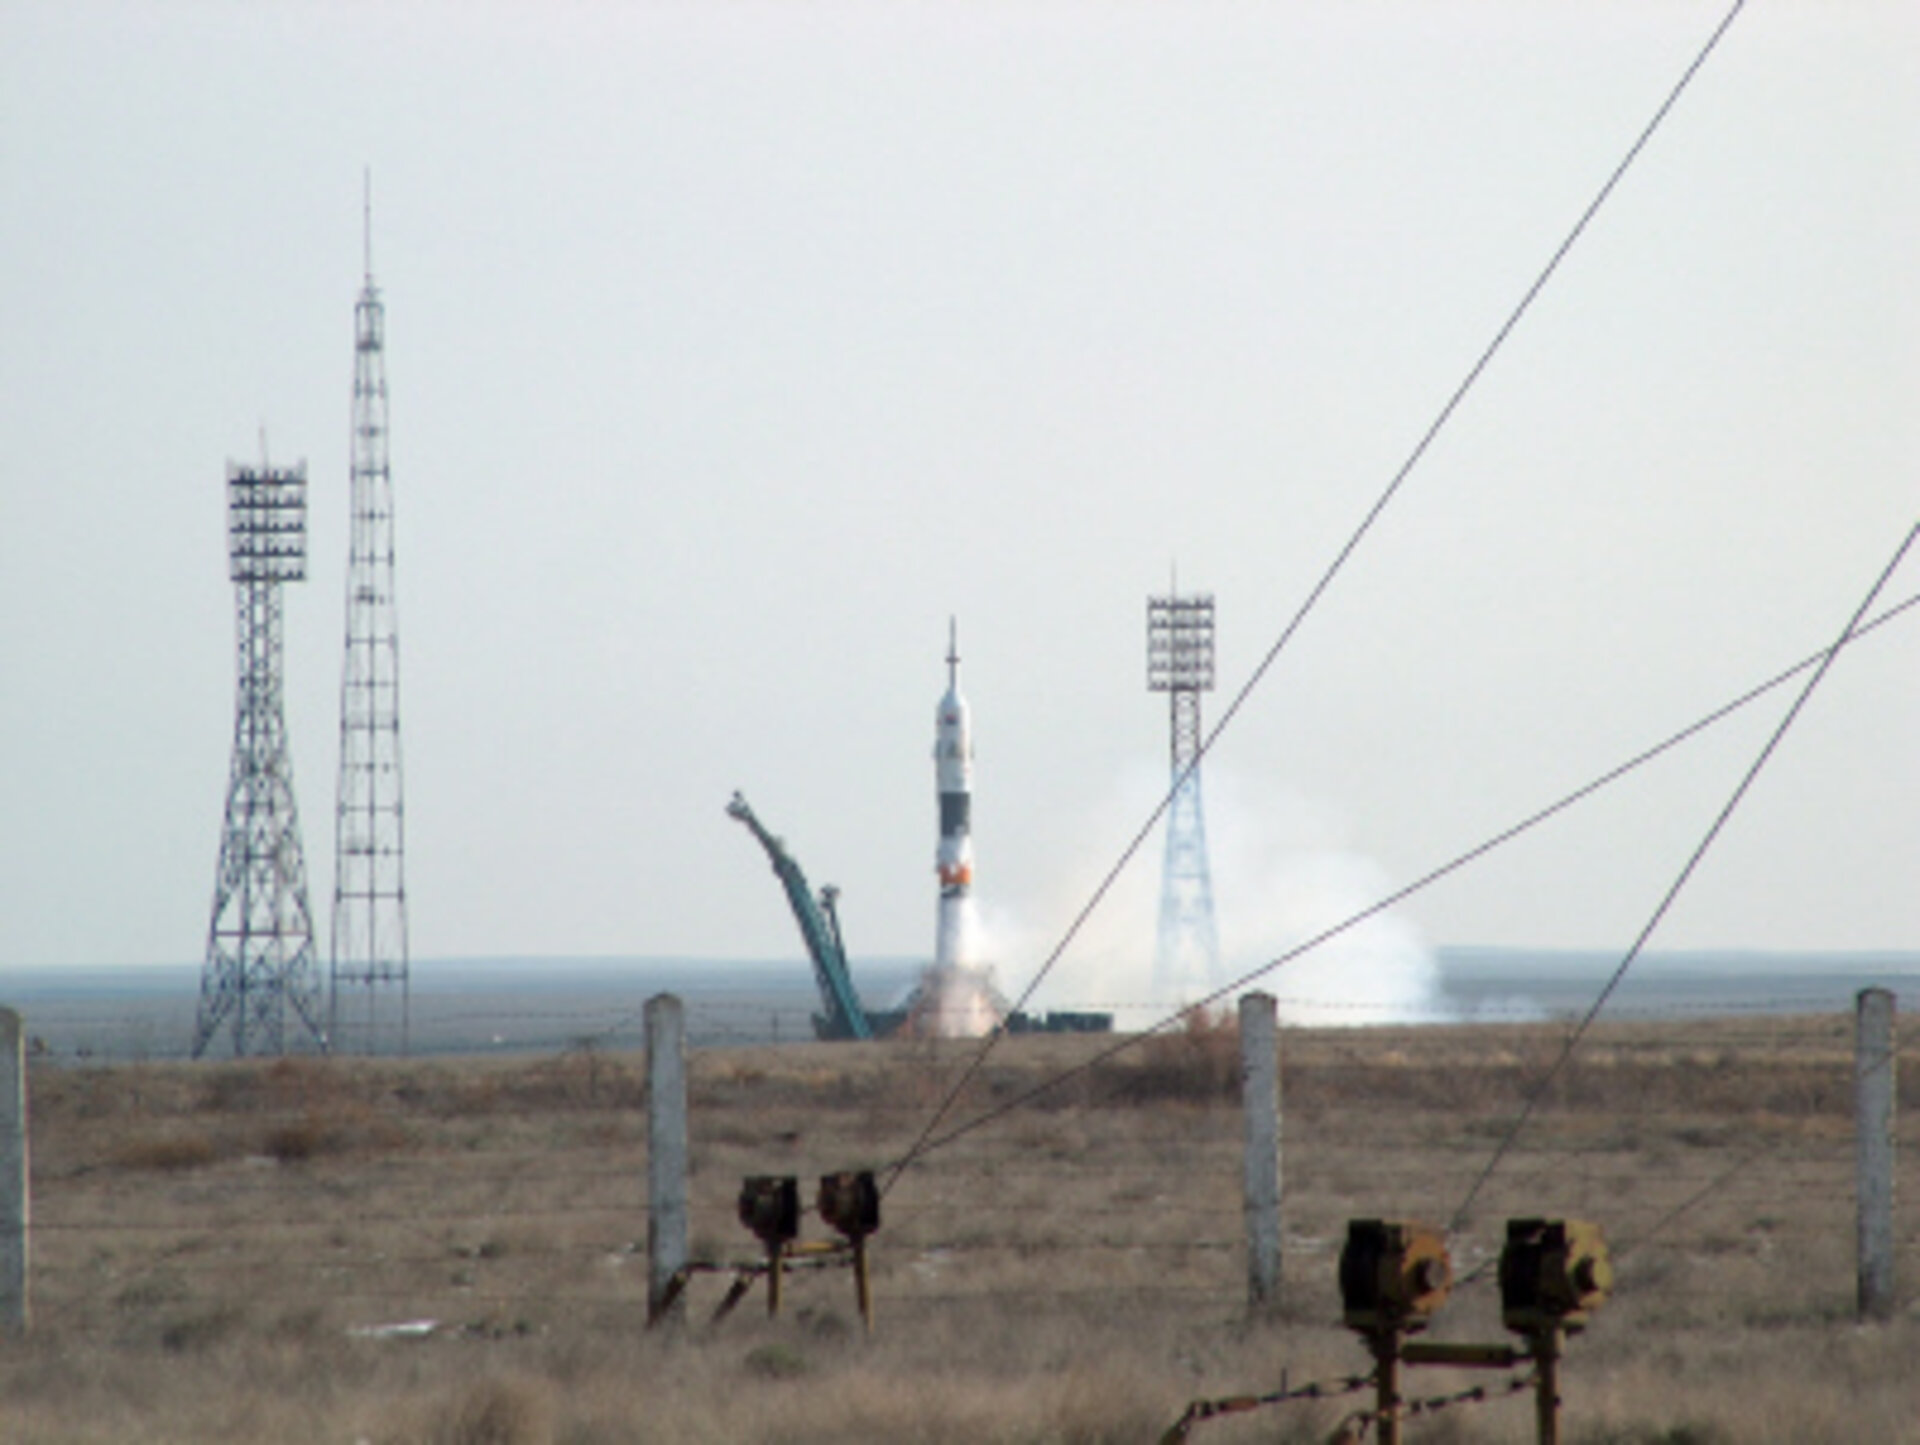 Delta mission launch